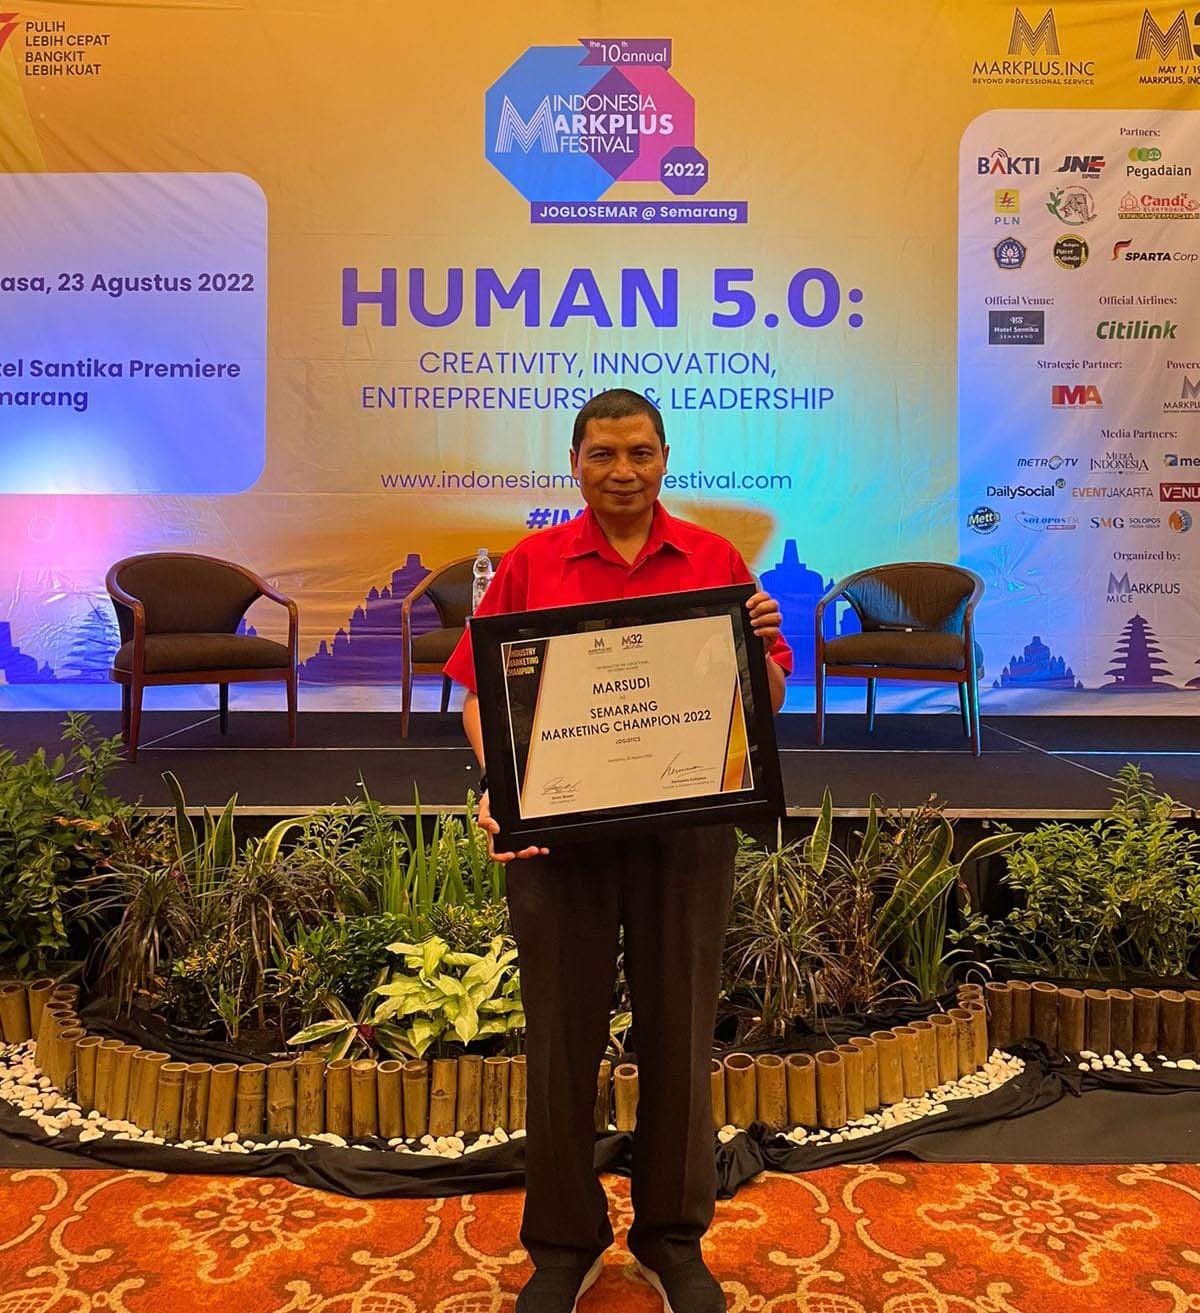 Marsudi, Head Regional Jateng-DIY JNE menunjukkan piagam Penghargaan Indonesia Markplus Festival 2022.